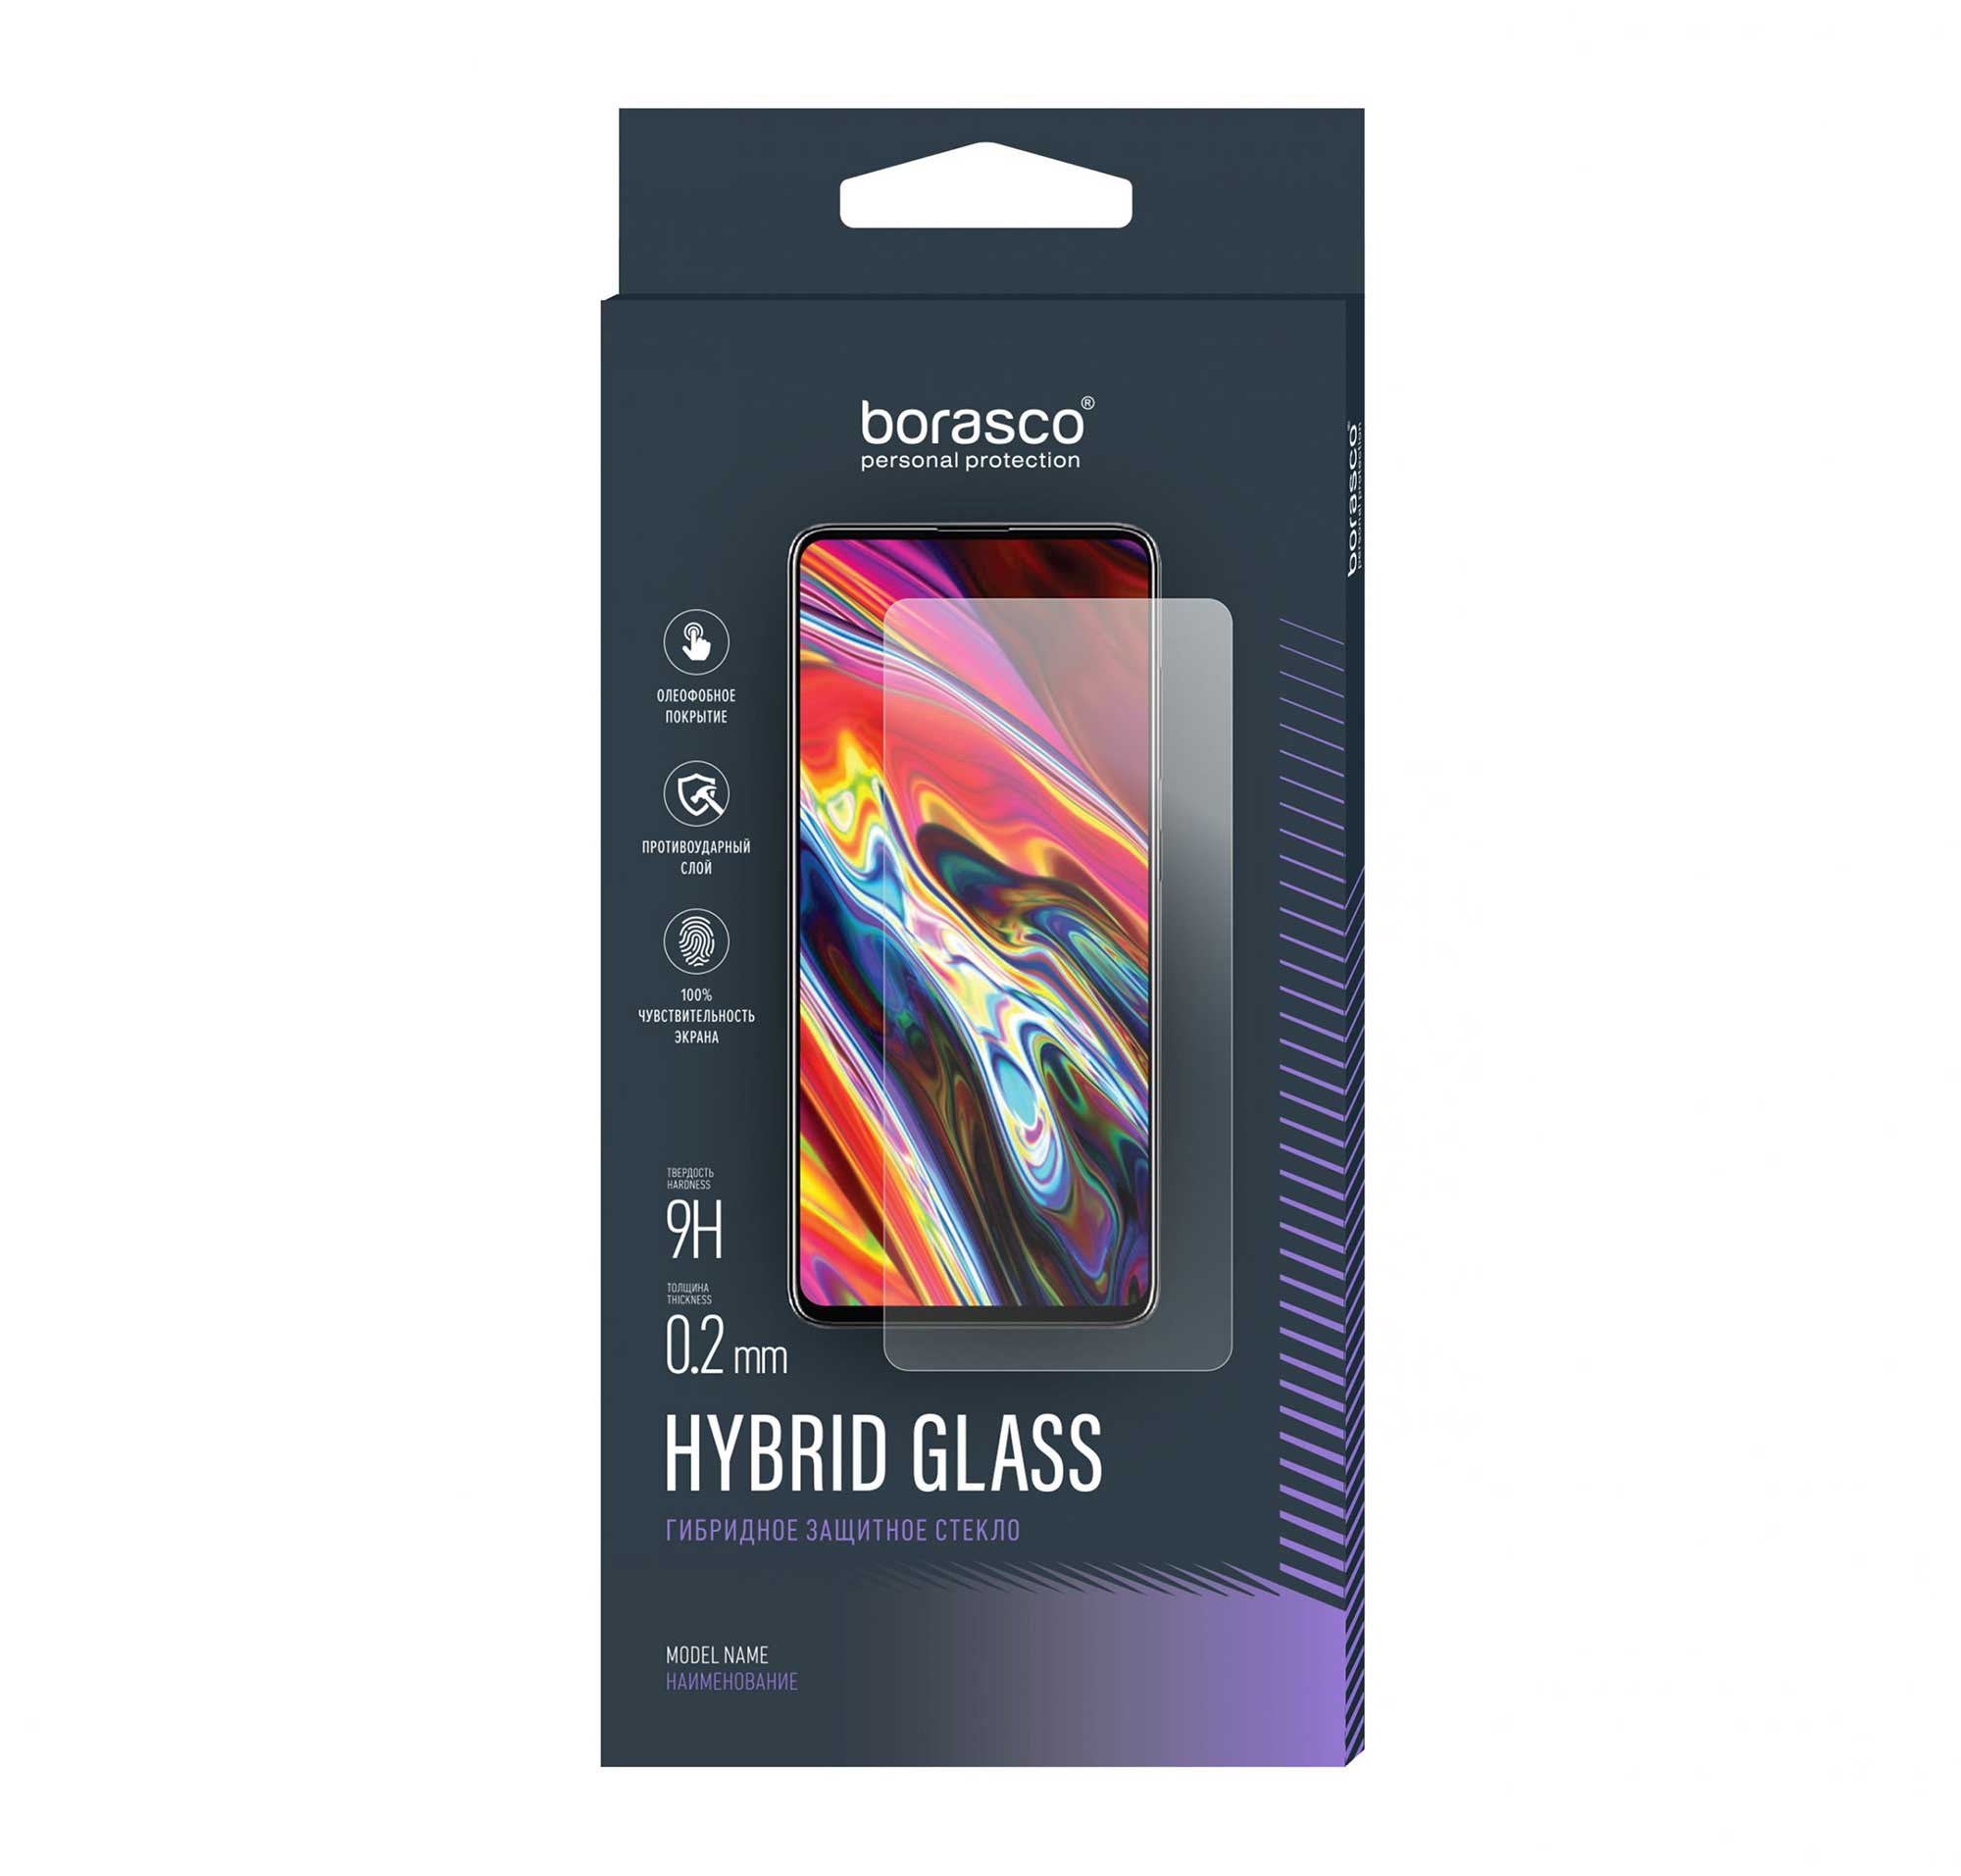 Защитное стекло BoraSCO Hybrid Glass для Sony Xperia XZ3 силиконовый чехол cute girl на sony xperia xz3 сони иксперия xz3